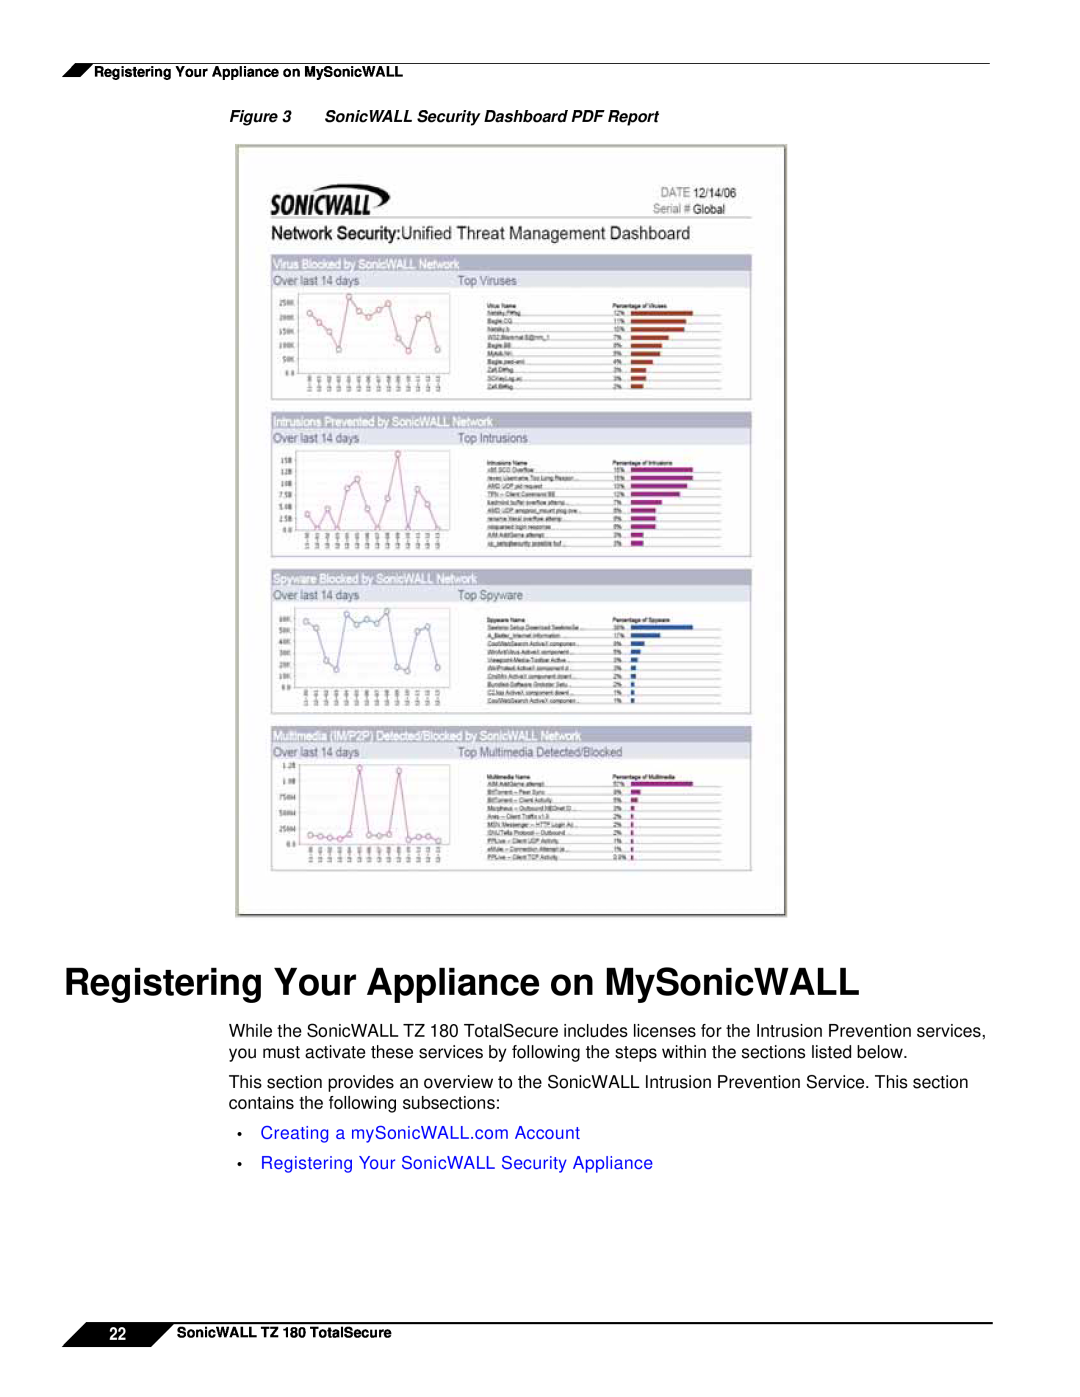 SonicWALL TZ 180 manual Registering Your Appliance on MySonicWALL, Registering Your SonicWALL Security Appliance 